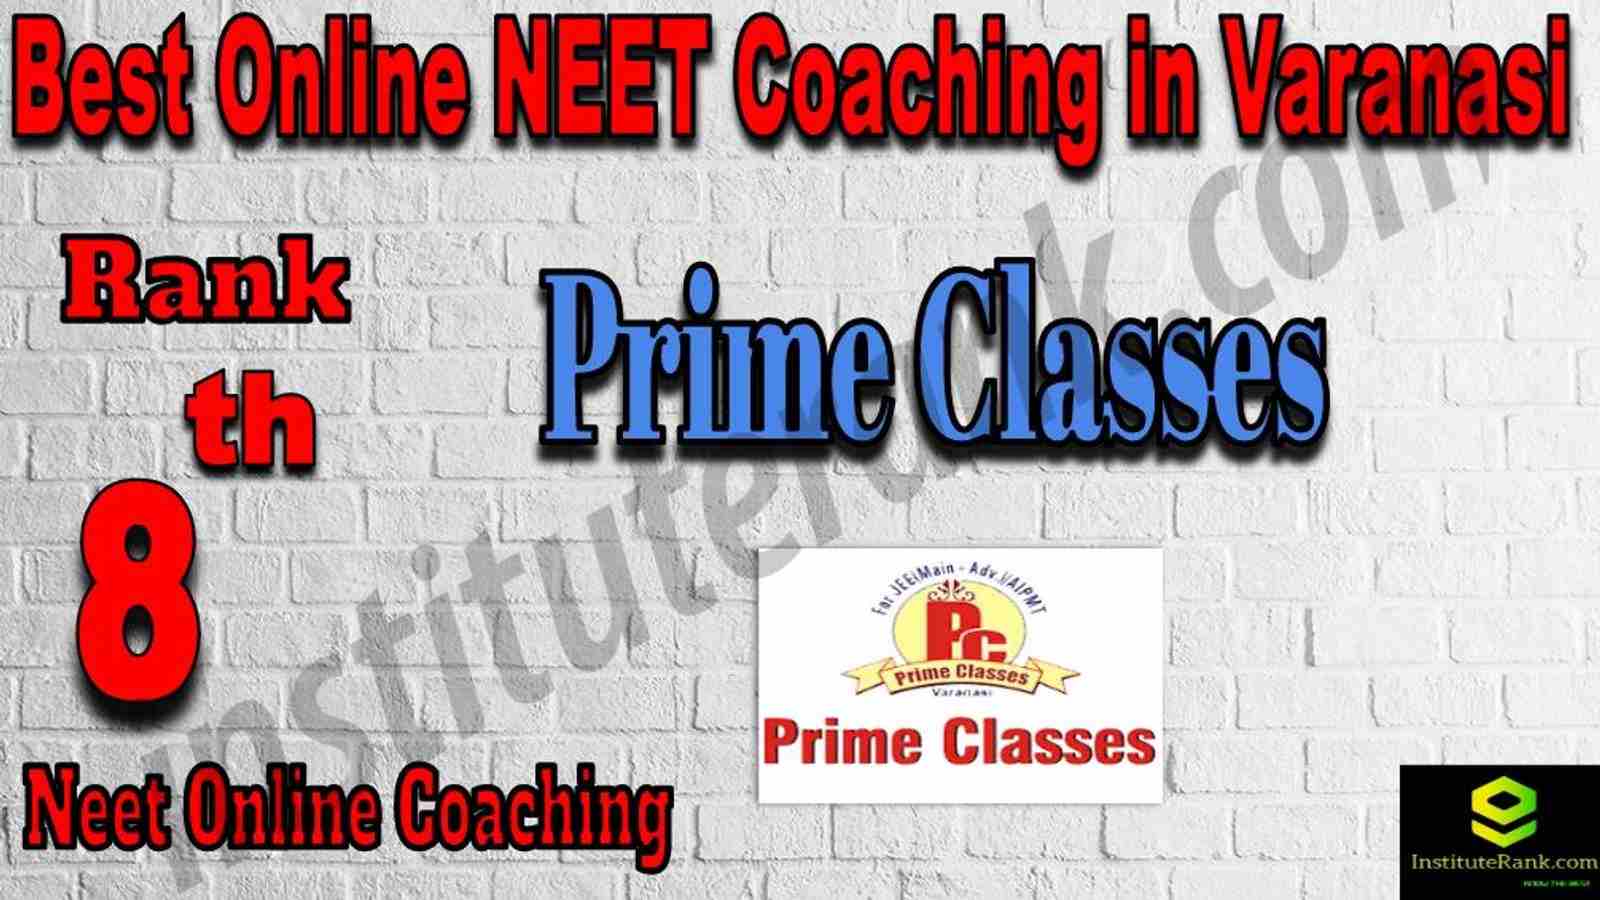 8th Best Online Neet Coaching in Varanasi